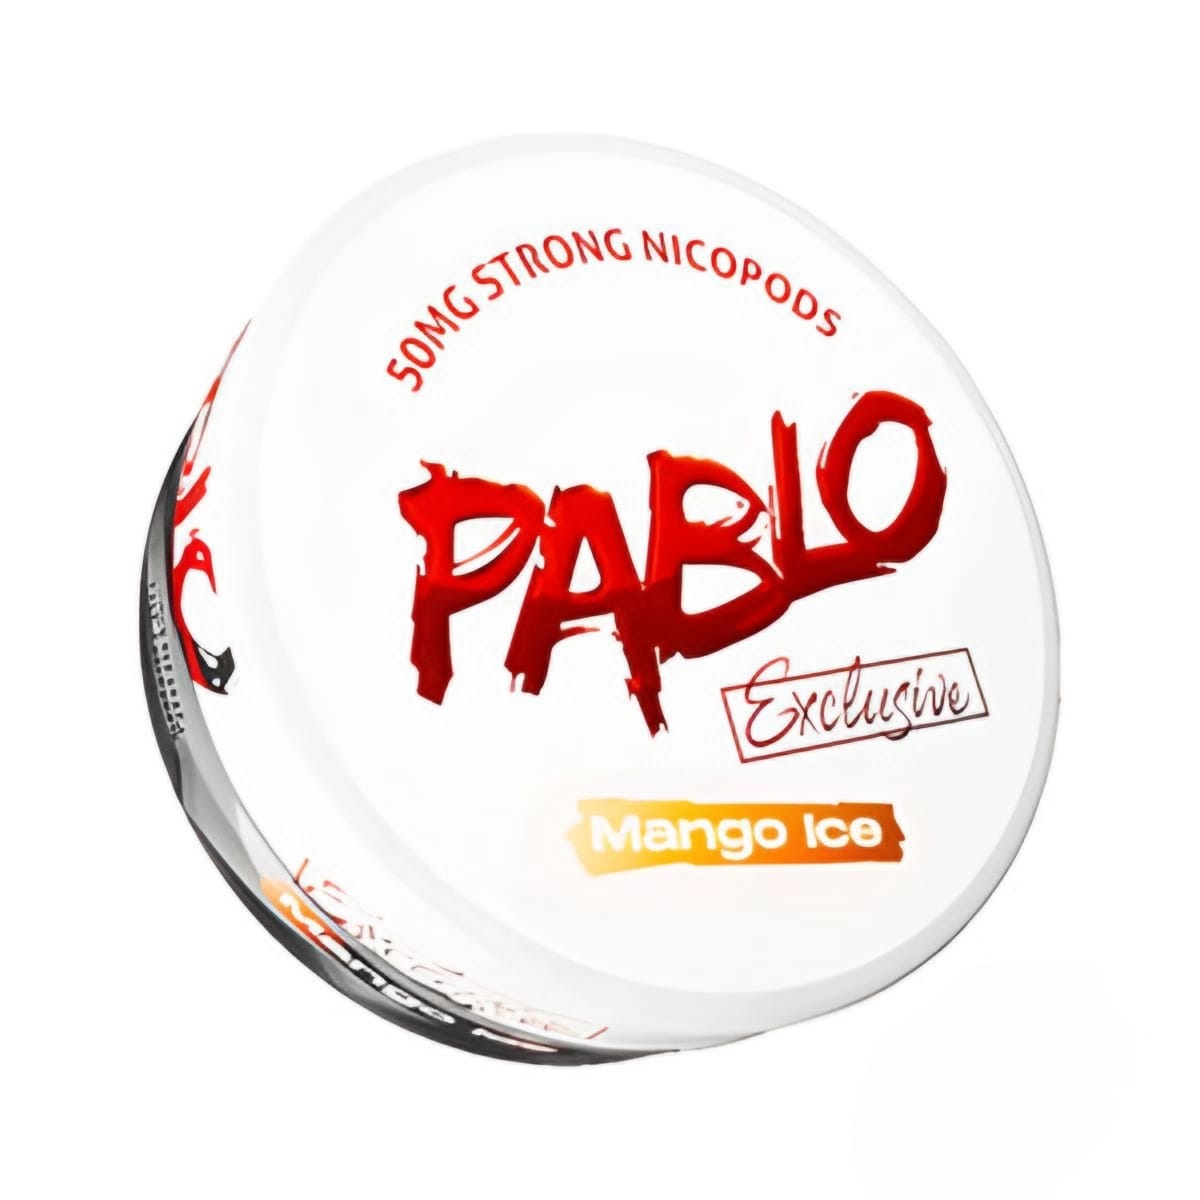 Pablo Exclusive Nicotine Pouches (Mango Ice)